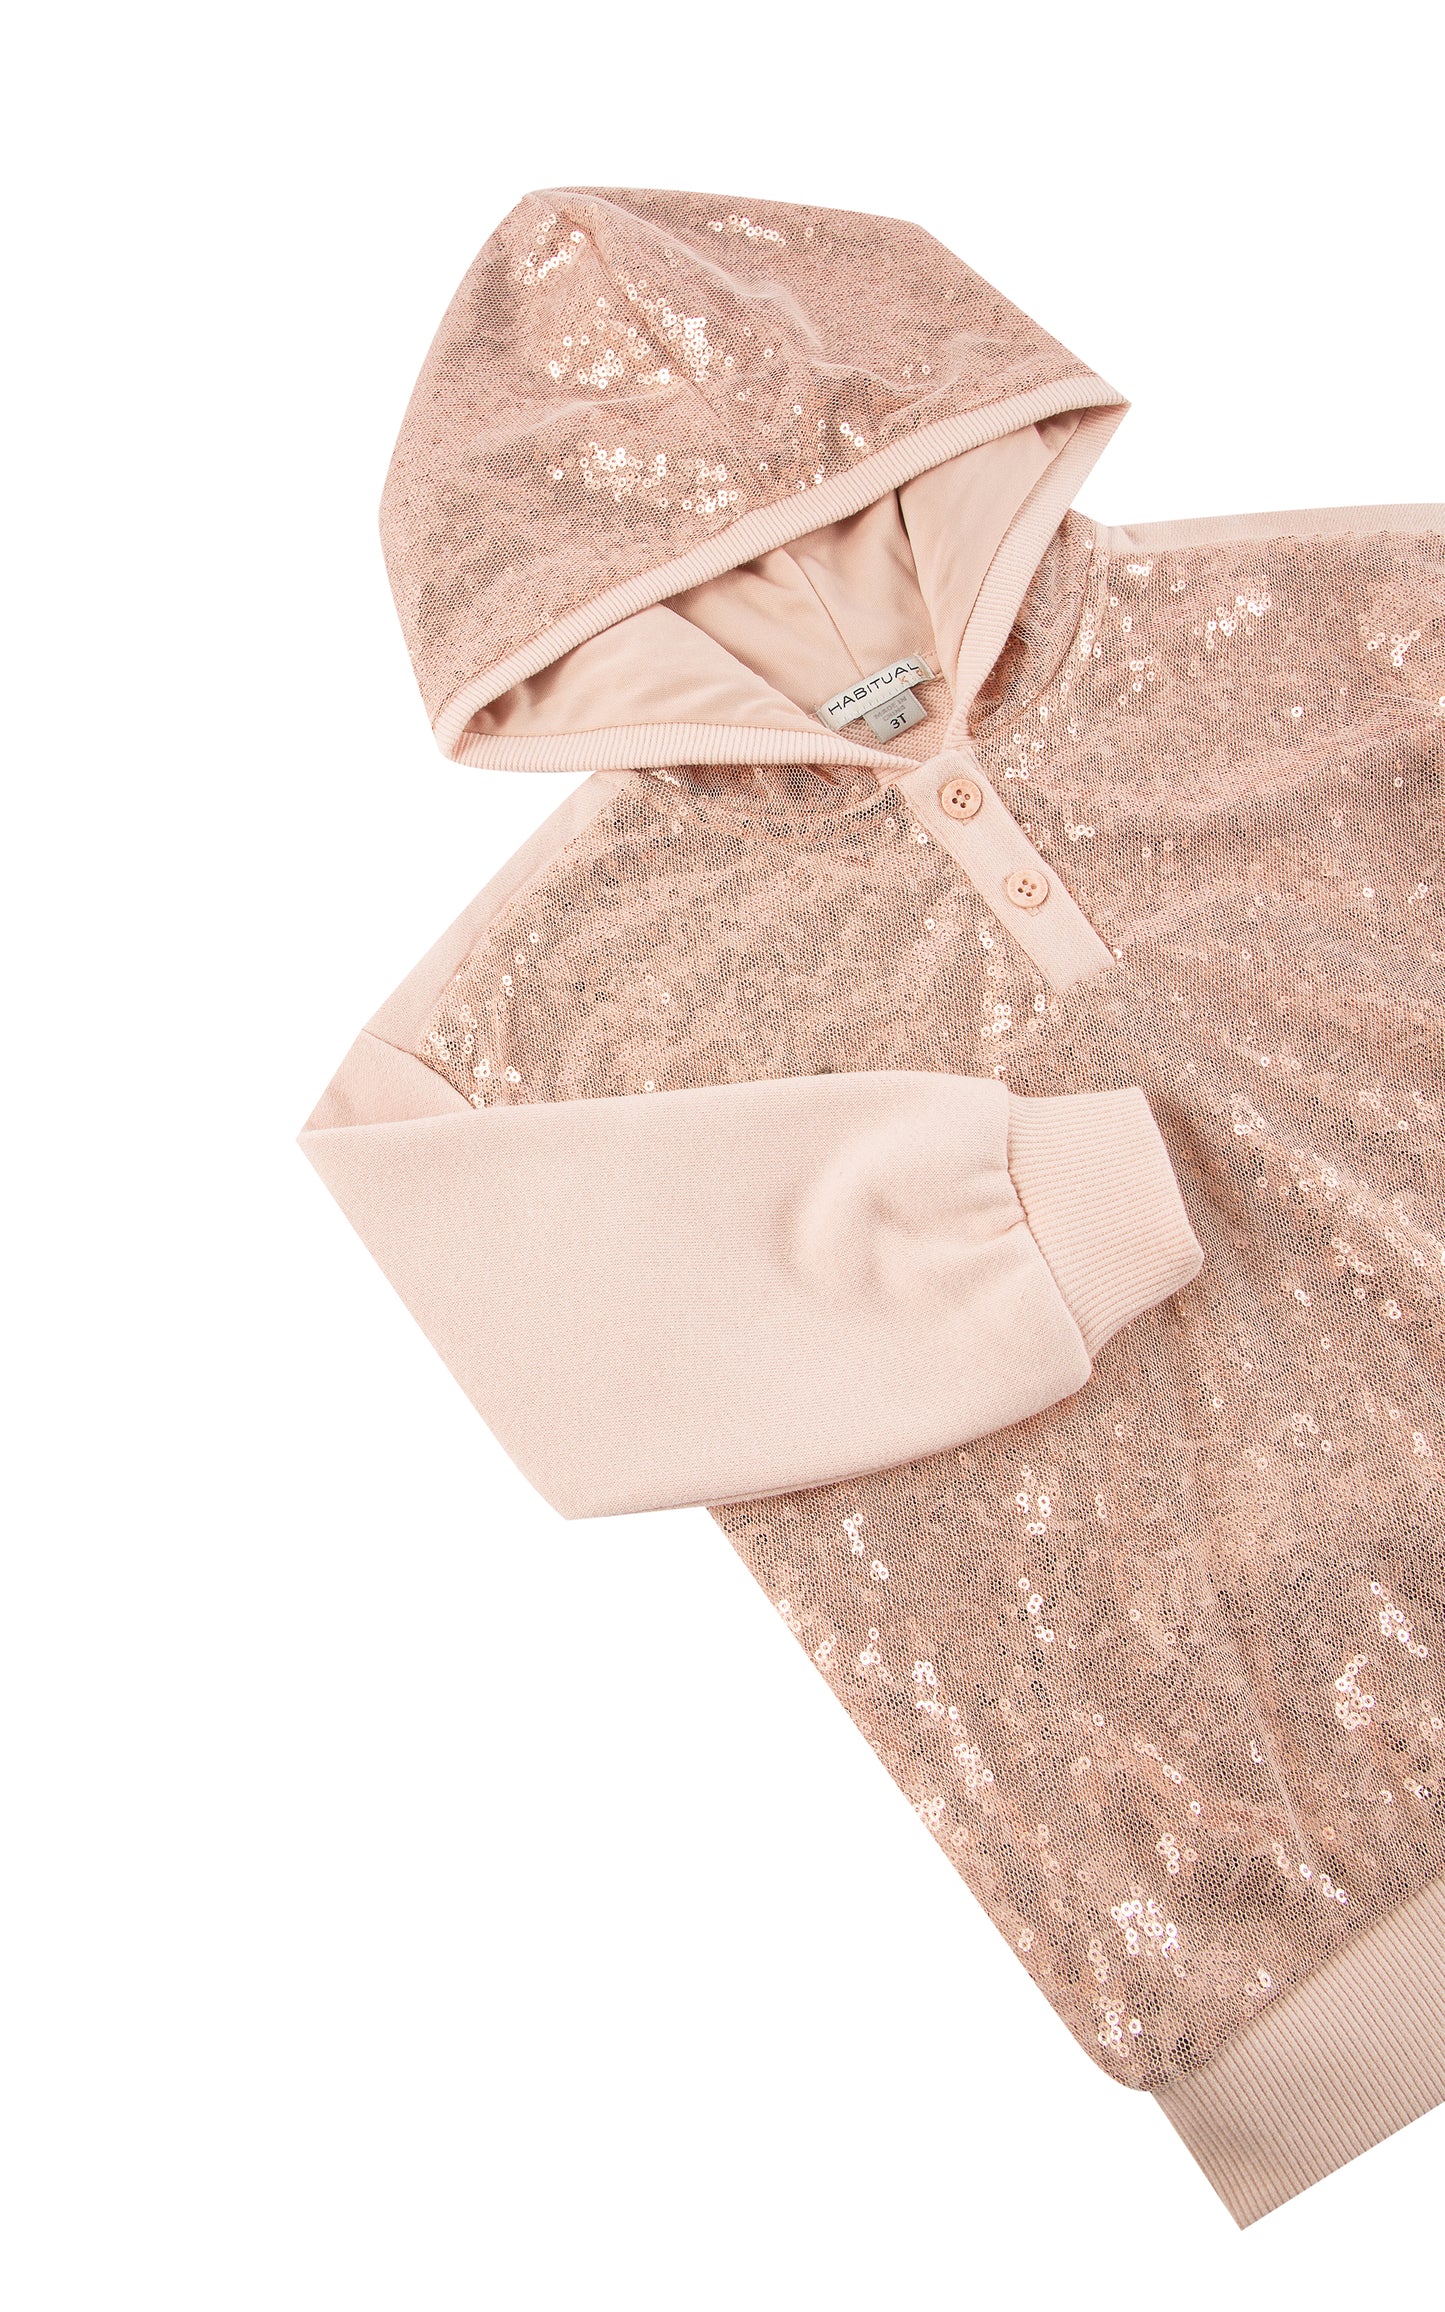 Detail view of pink sequin hoodie